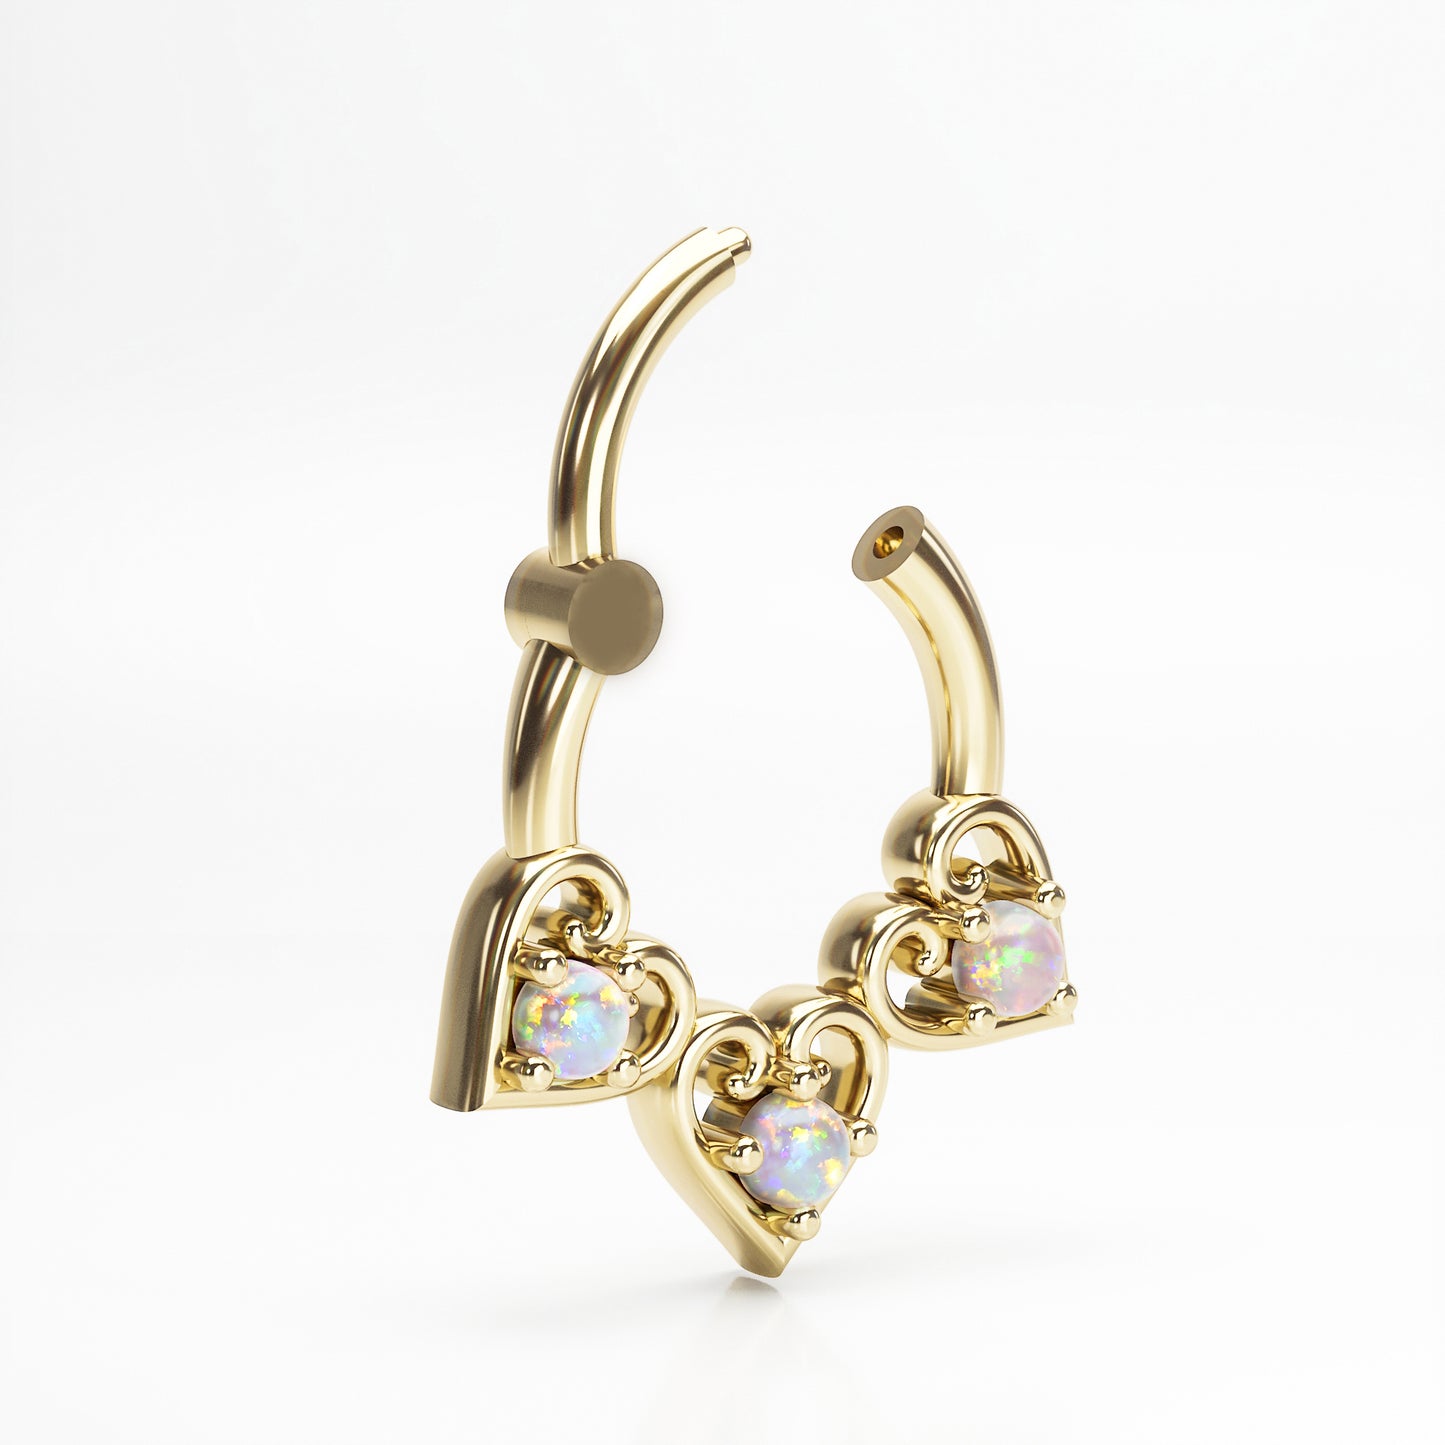 Solid Gold Opal Heart Clicker Hoop